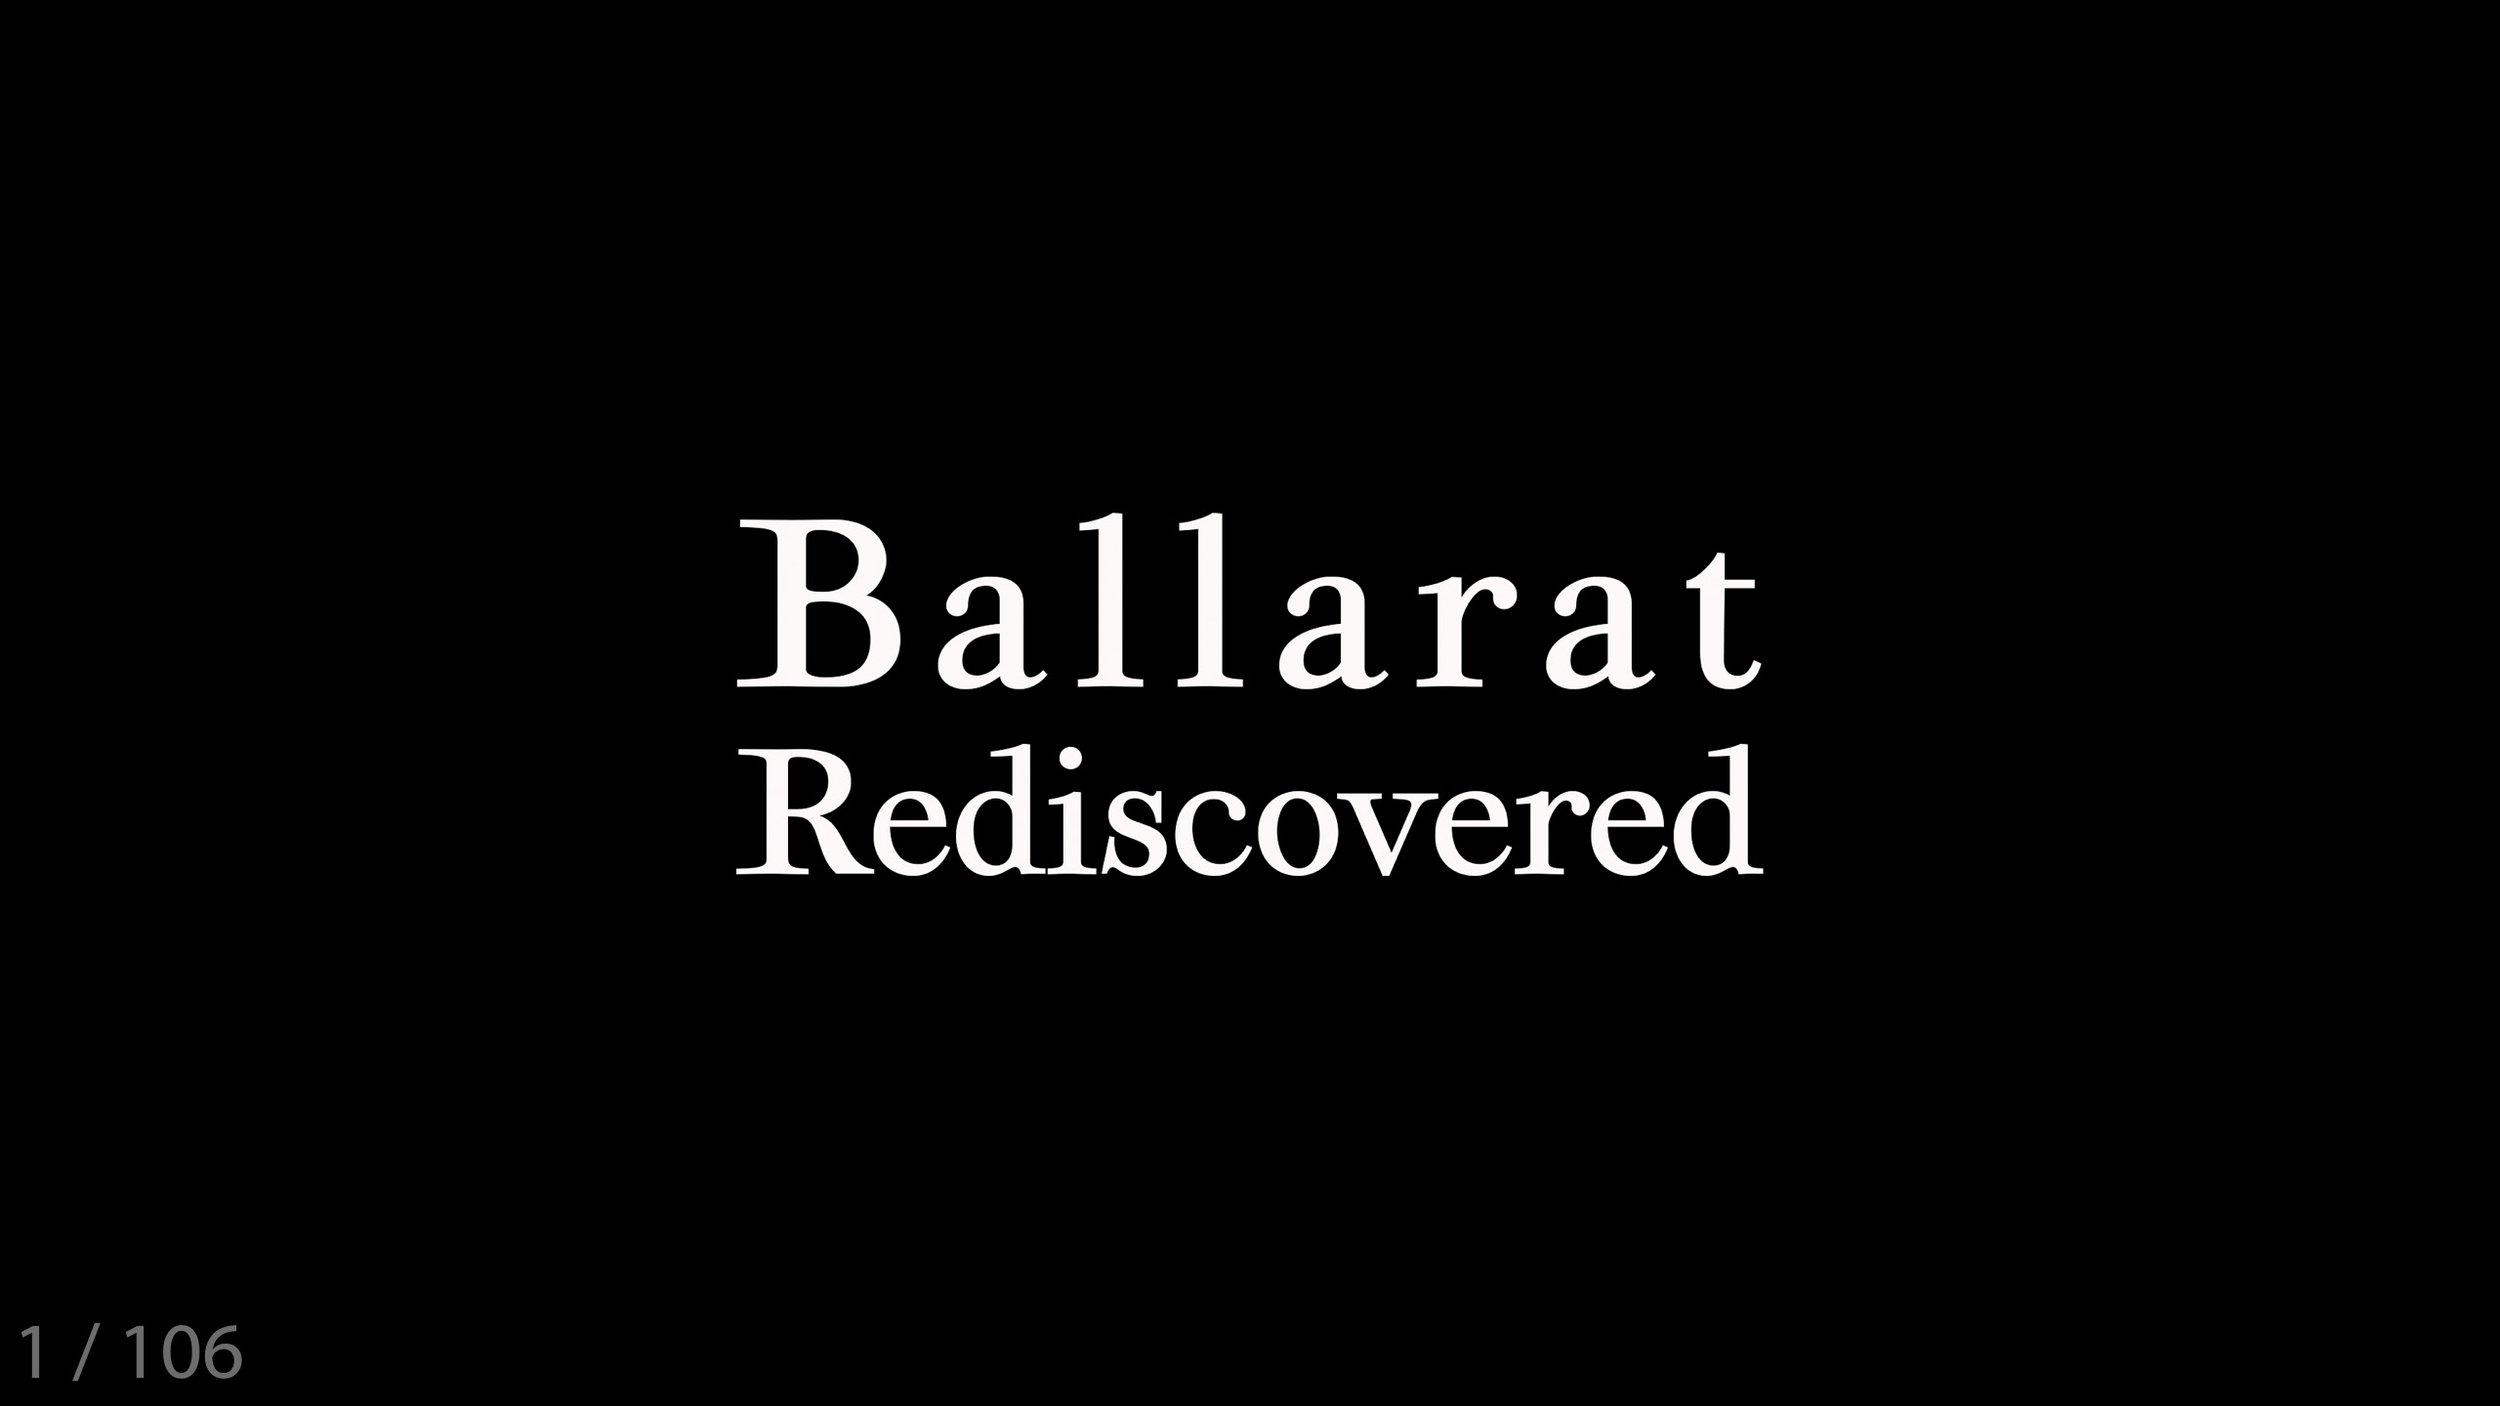 Ballarat rediscovered-001.jpg